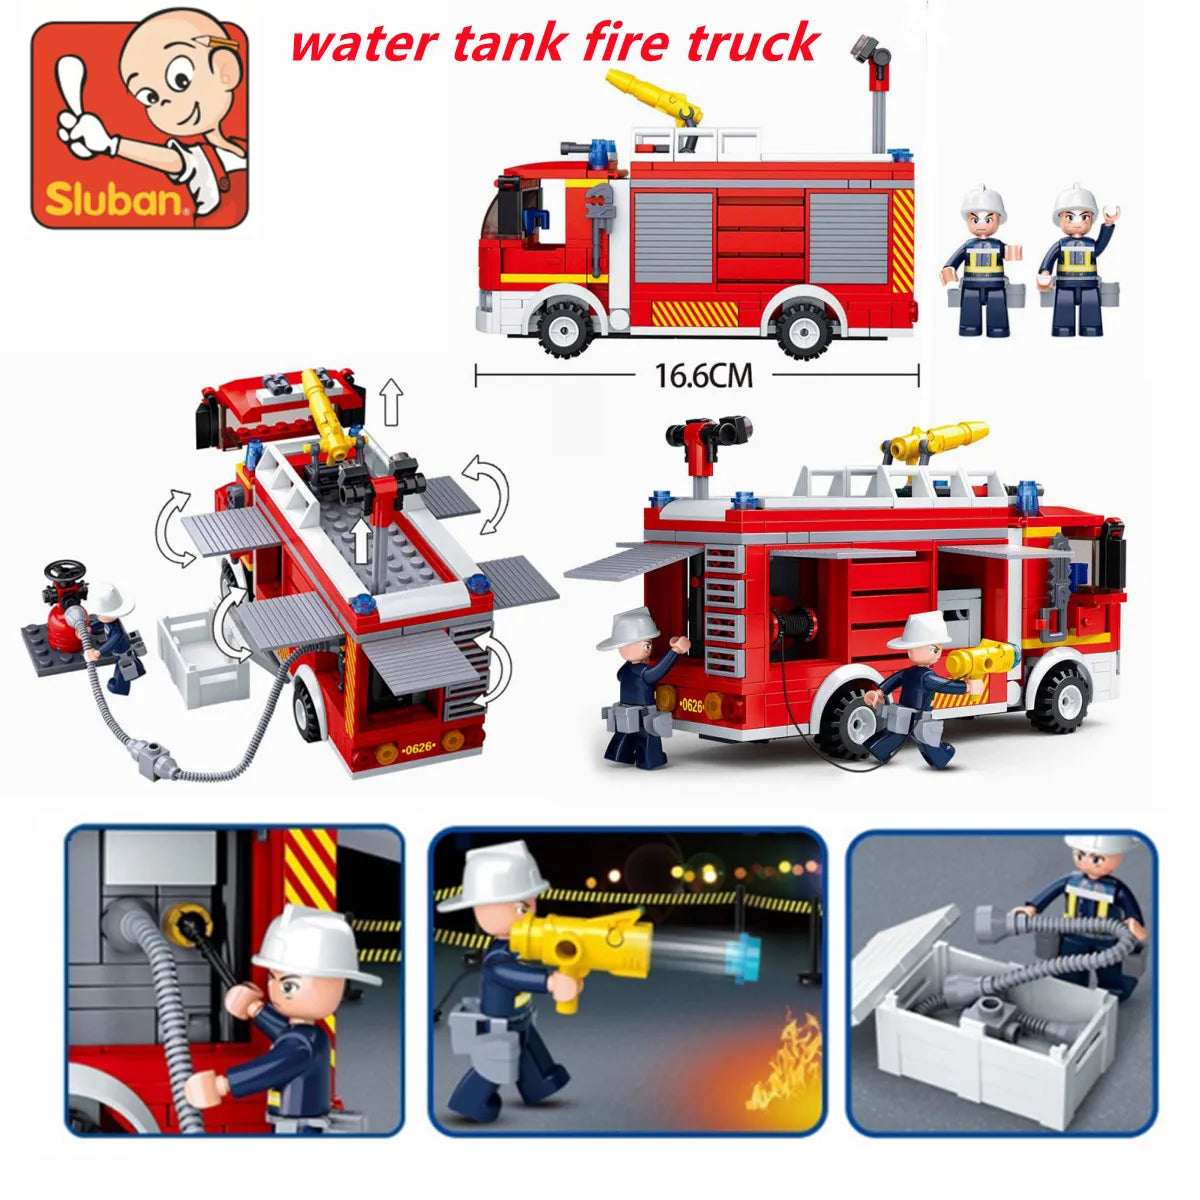 City Fire Fighter Building Block Toy Set by Sluban - 343PCS Bricks B0626